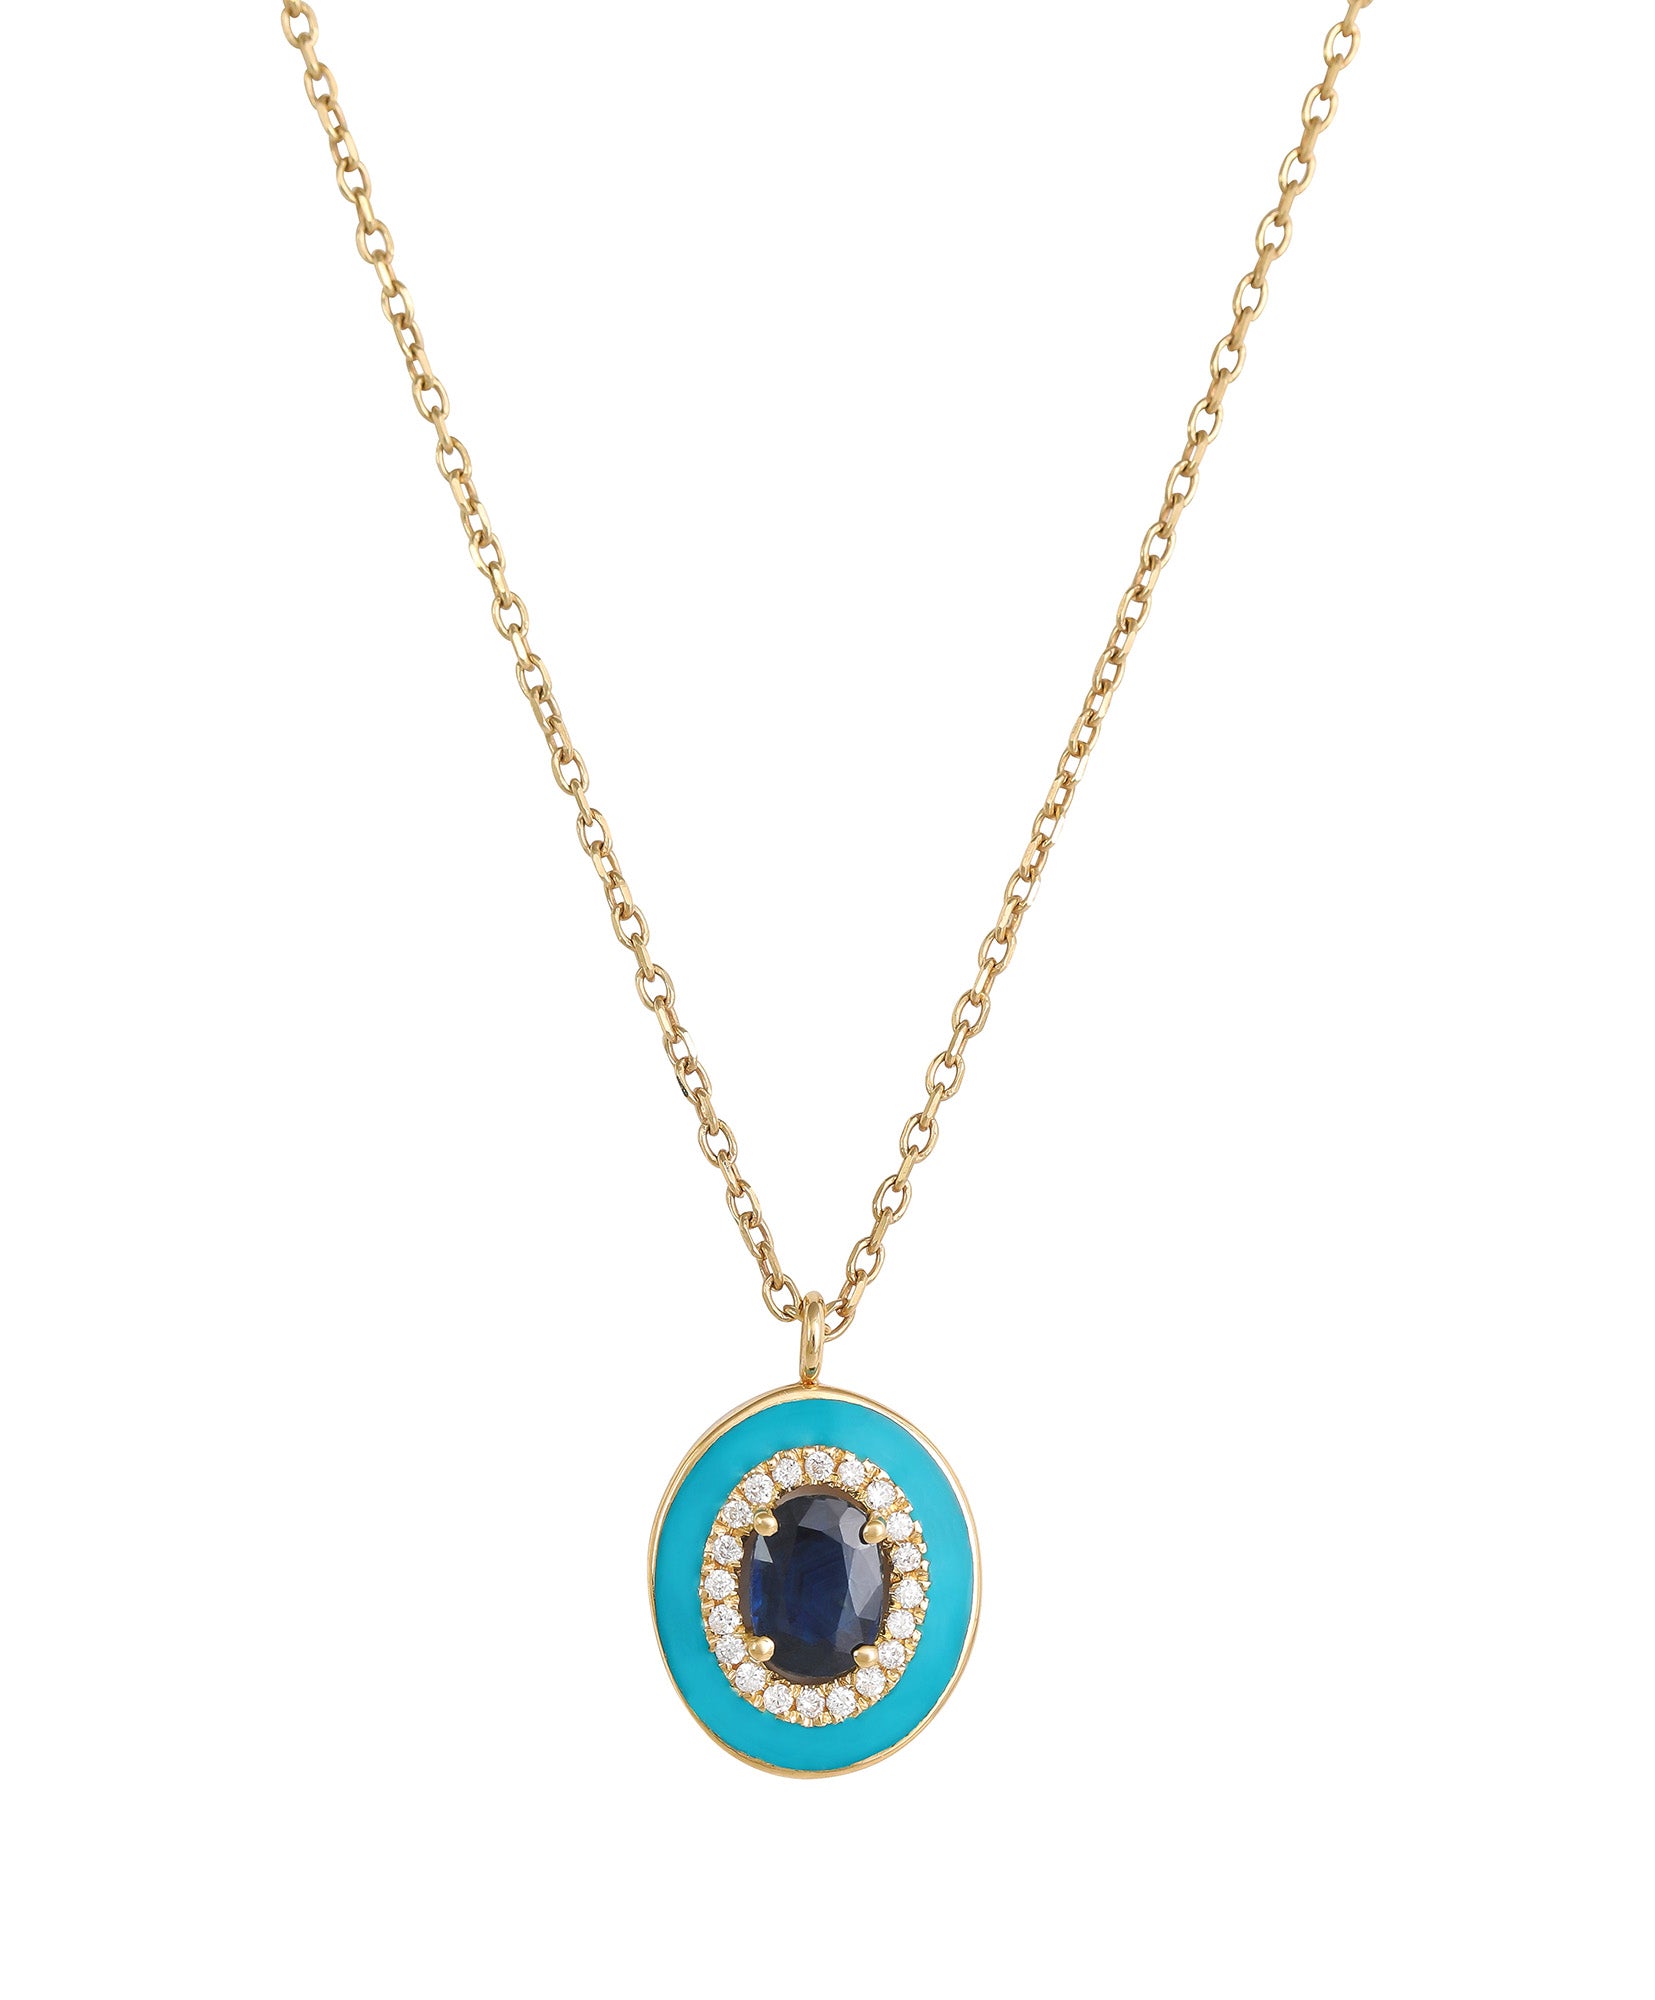 J by Boghossian, necklace, white diamond, gold, sapphire, turquoise enamel